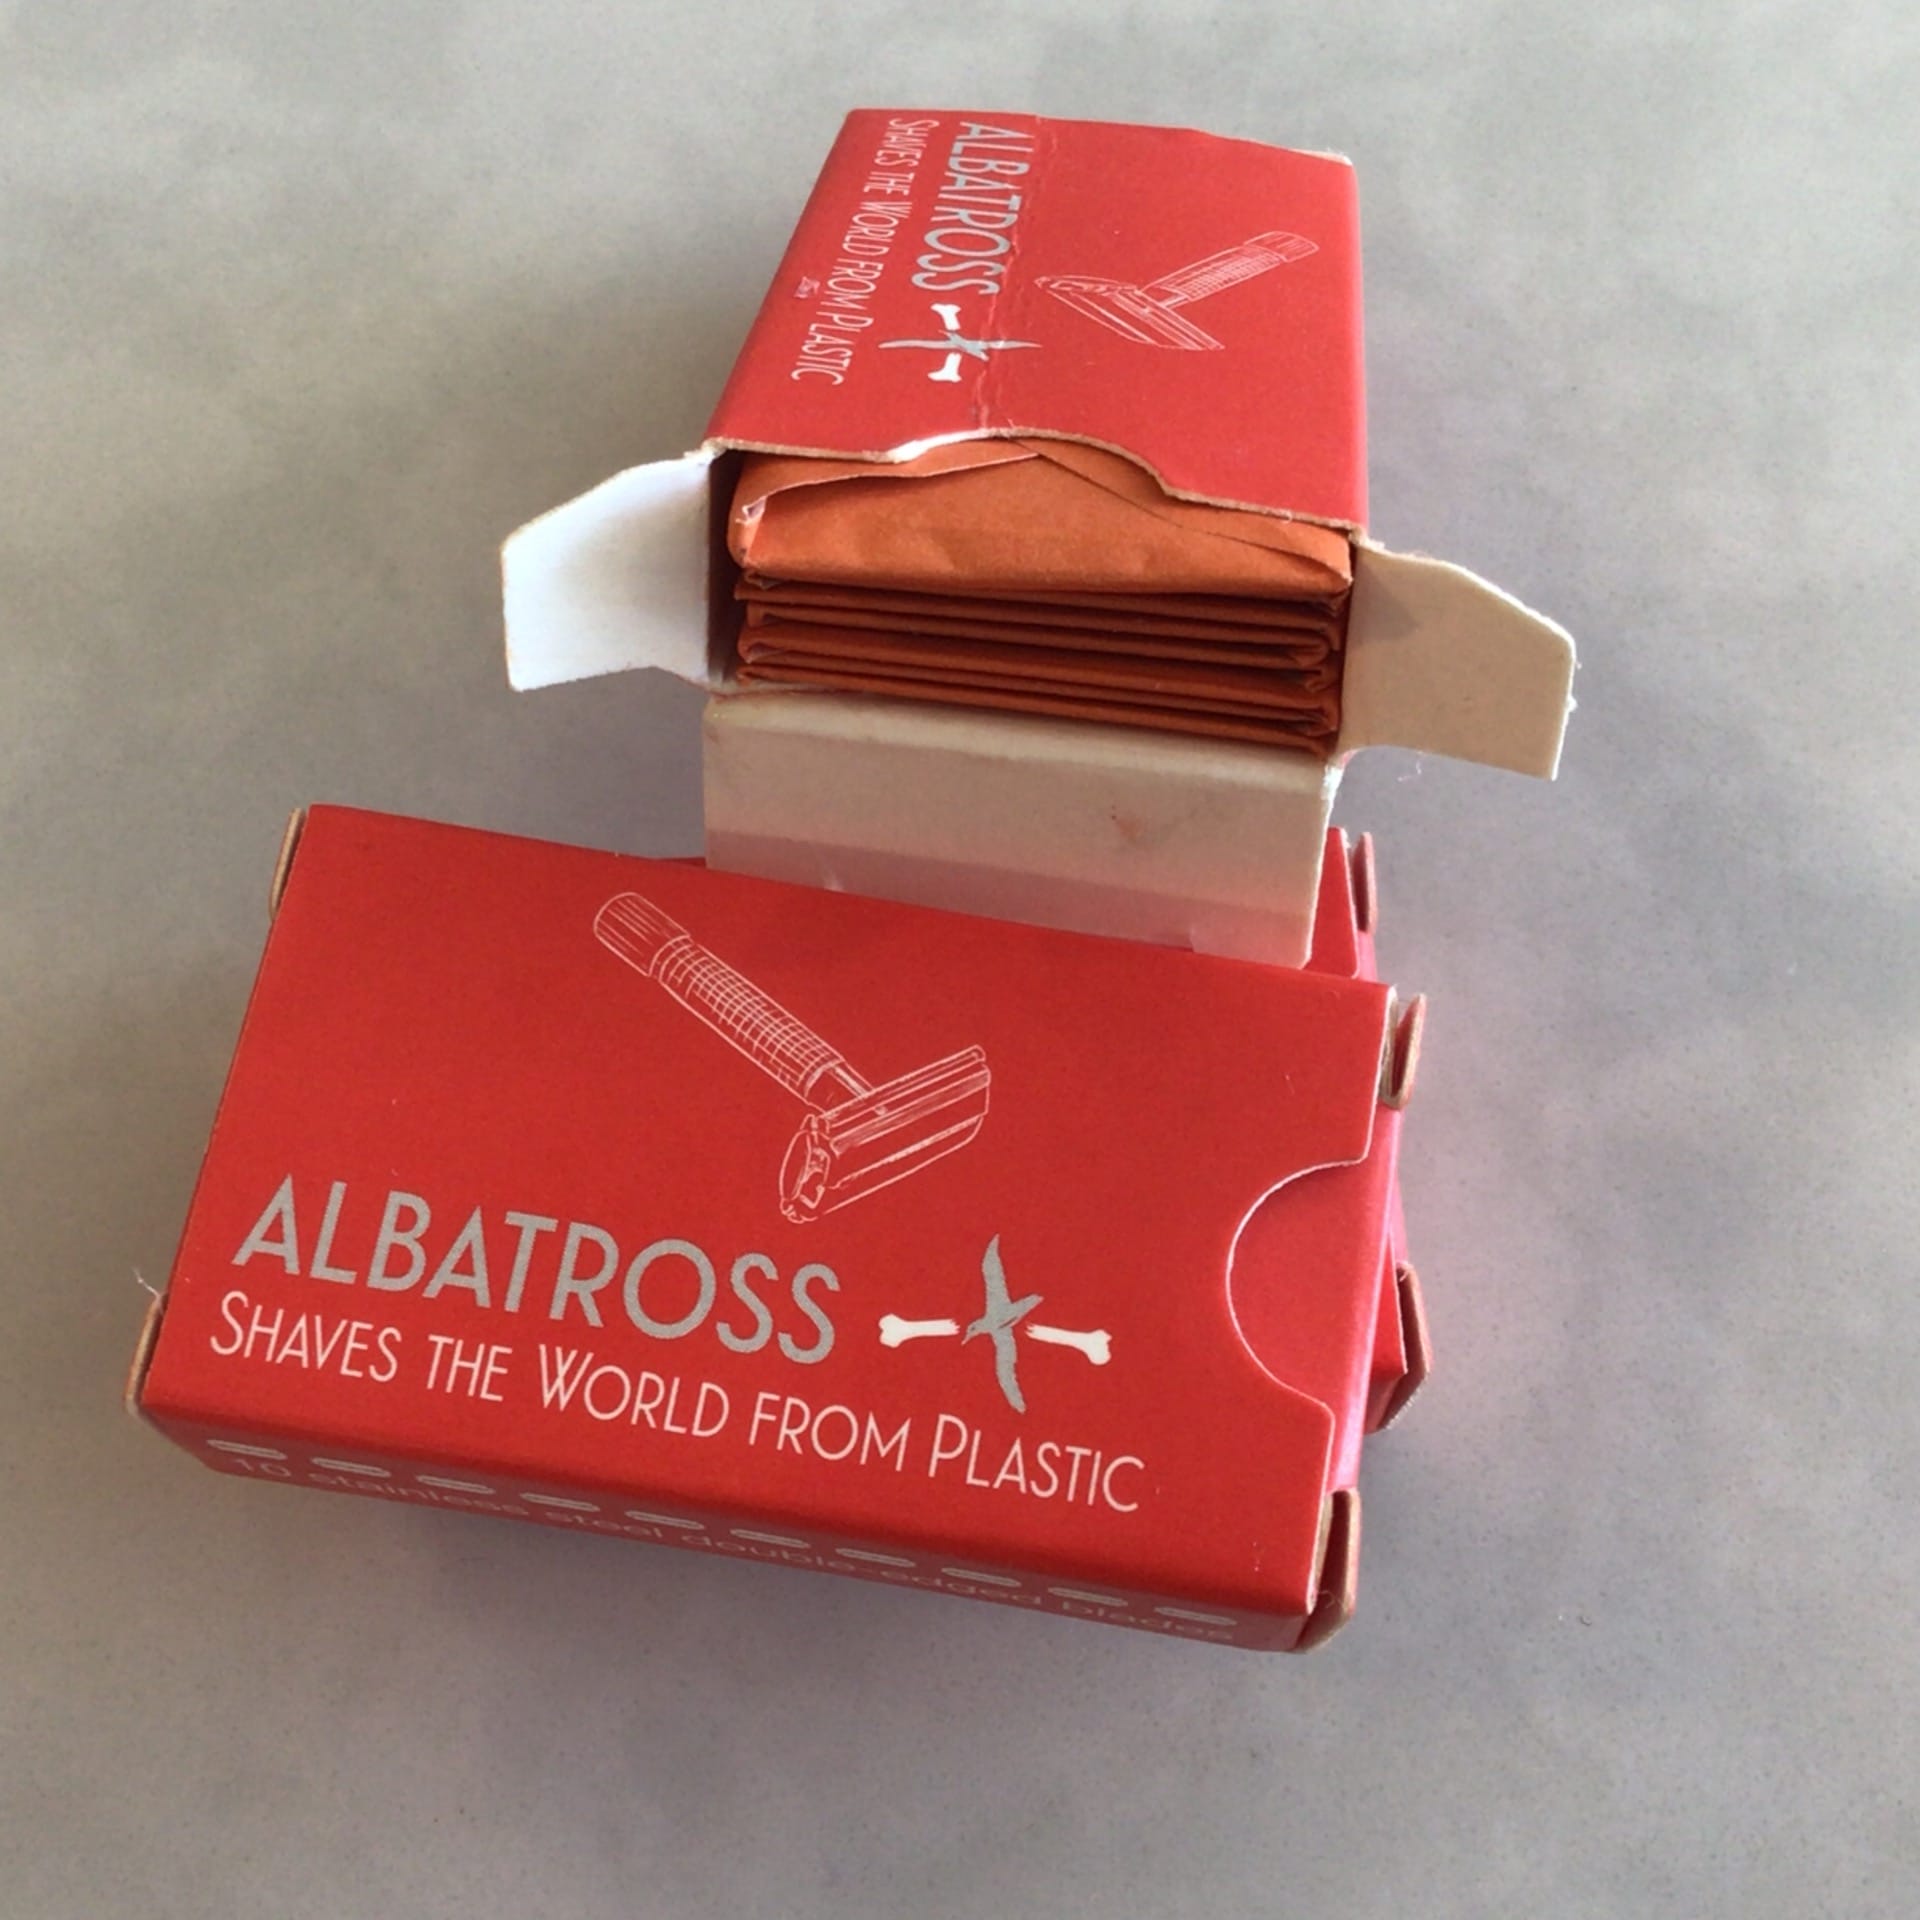 albatross replacement blades 10 pack